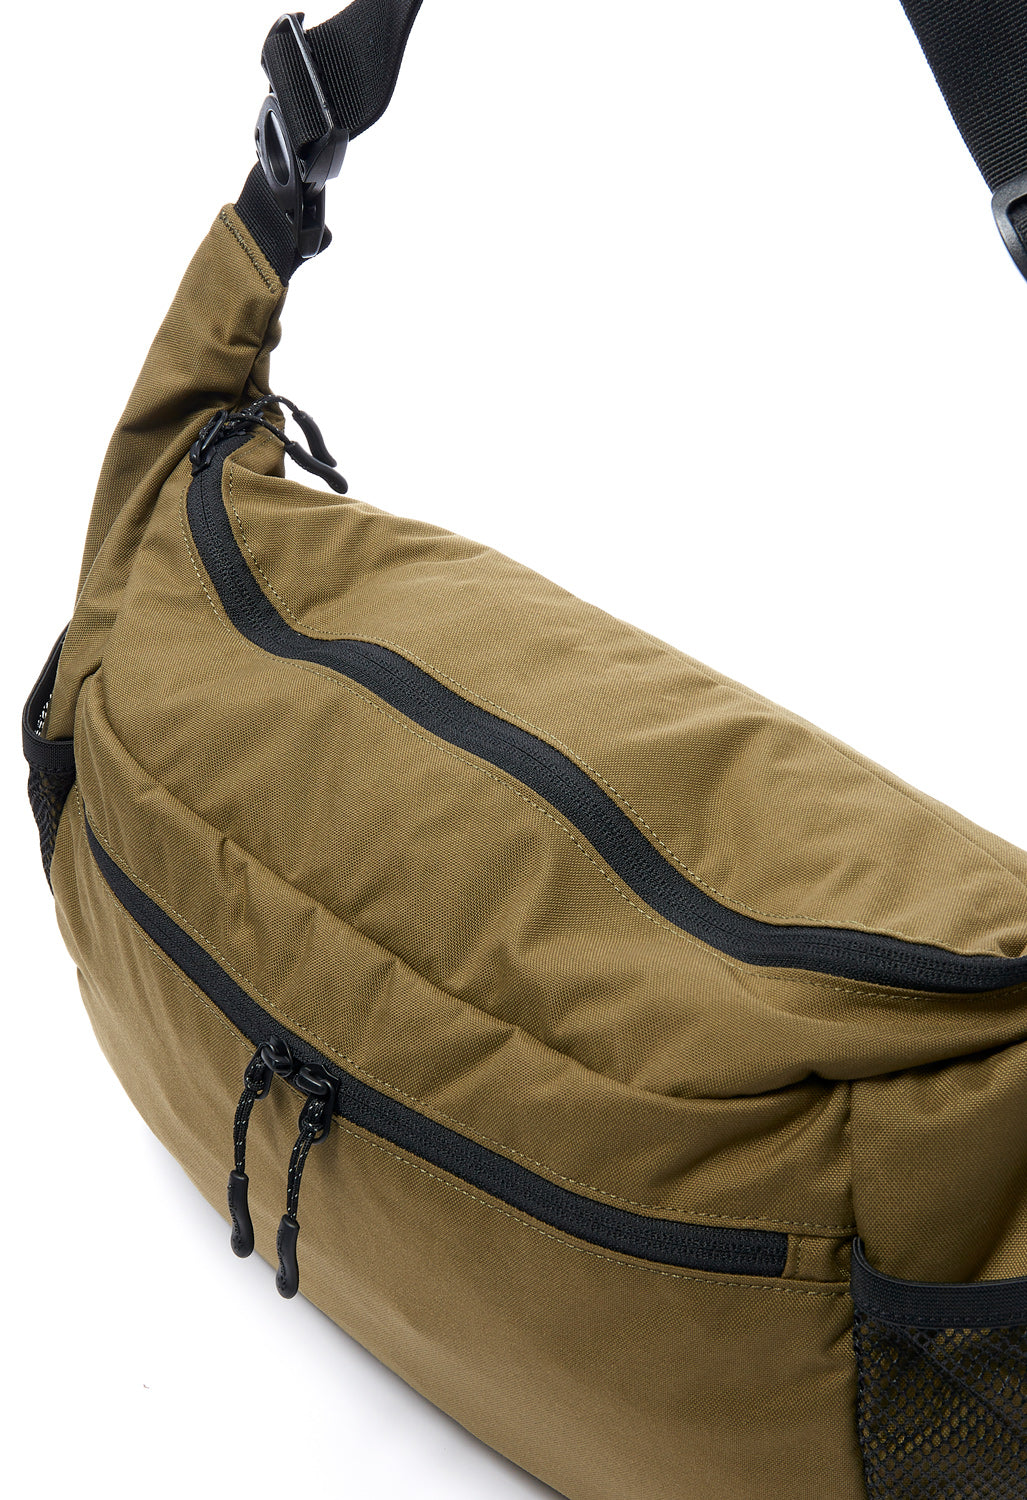 Snow Peak Everyday Use Middle Shoulder Bag - Brown